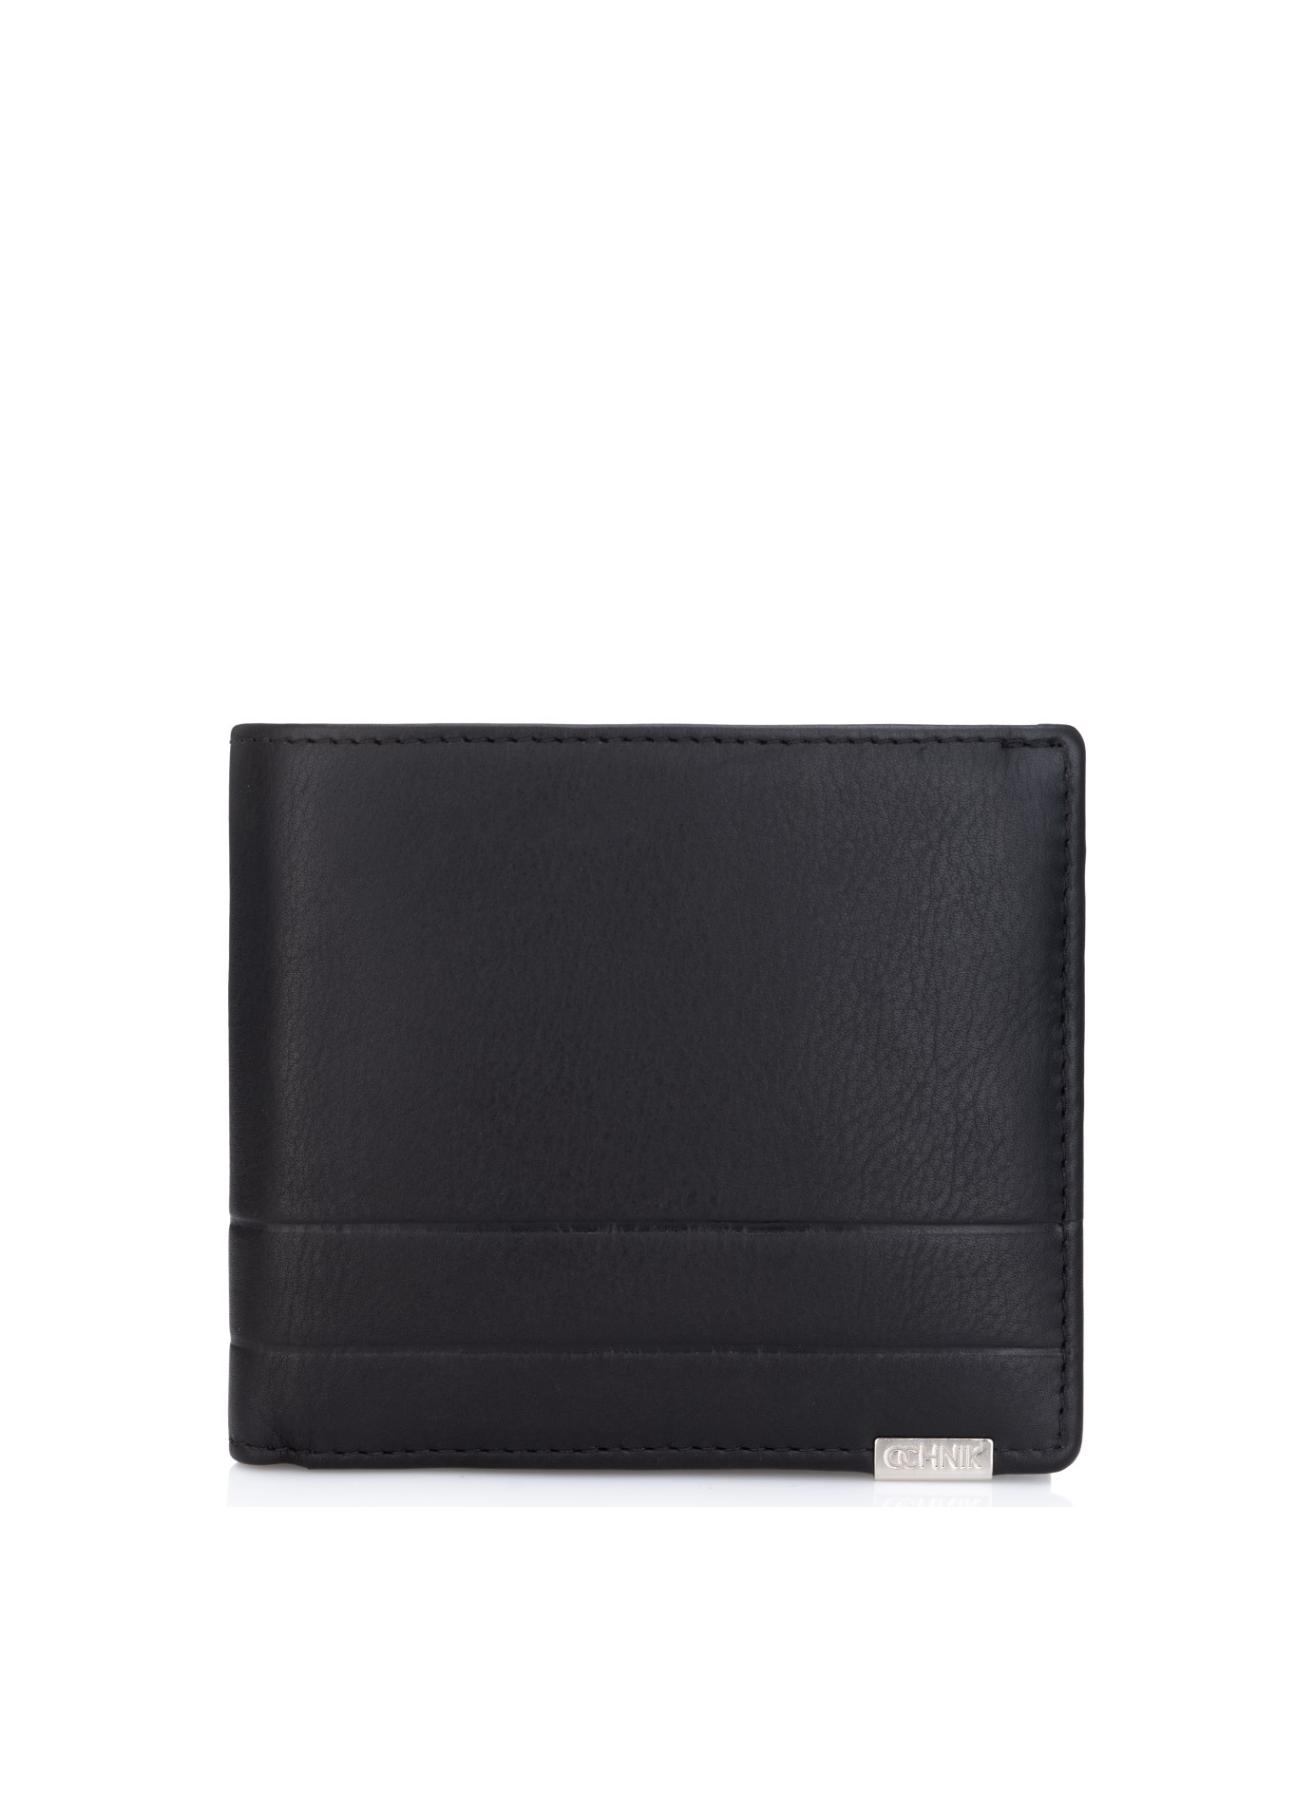 Czarny skórzany portfel męski PORMS-0142-99(Z23)